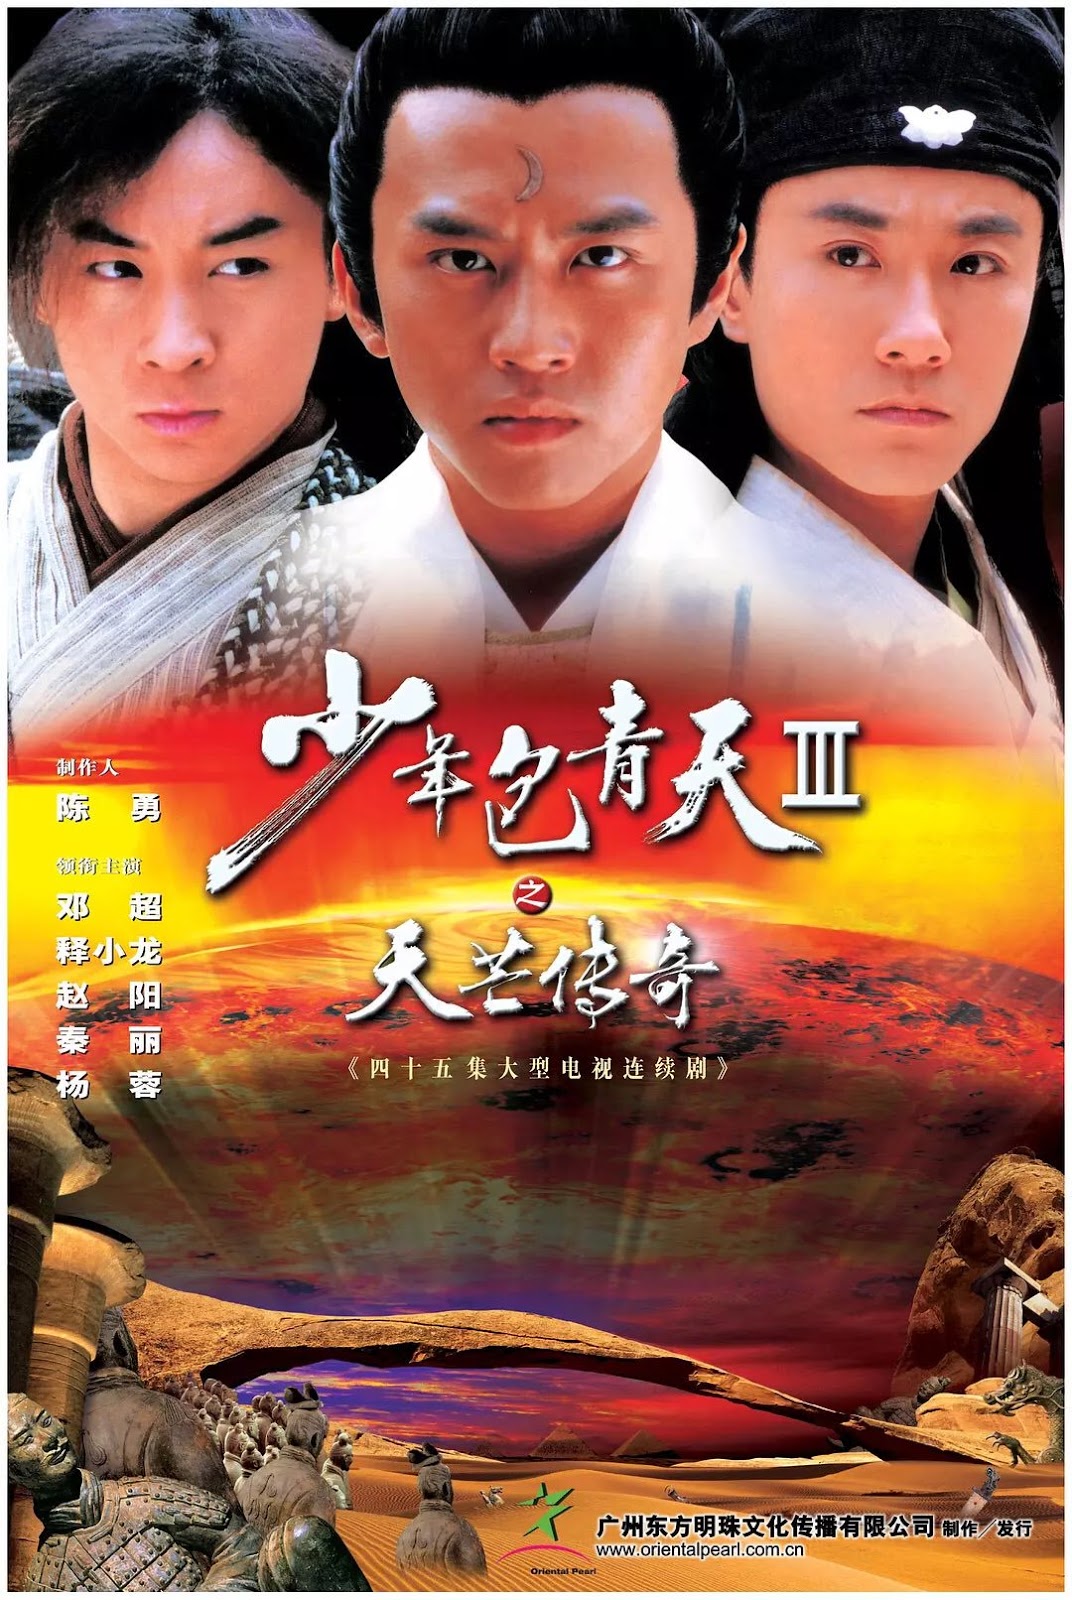 Poster Phim Tuổi Trẻ Bao Thanh Thiên P3 (The Young Detective 3)